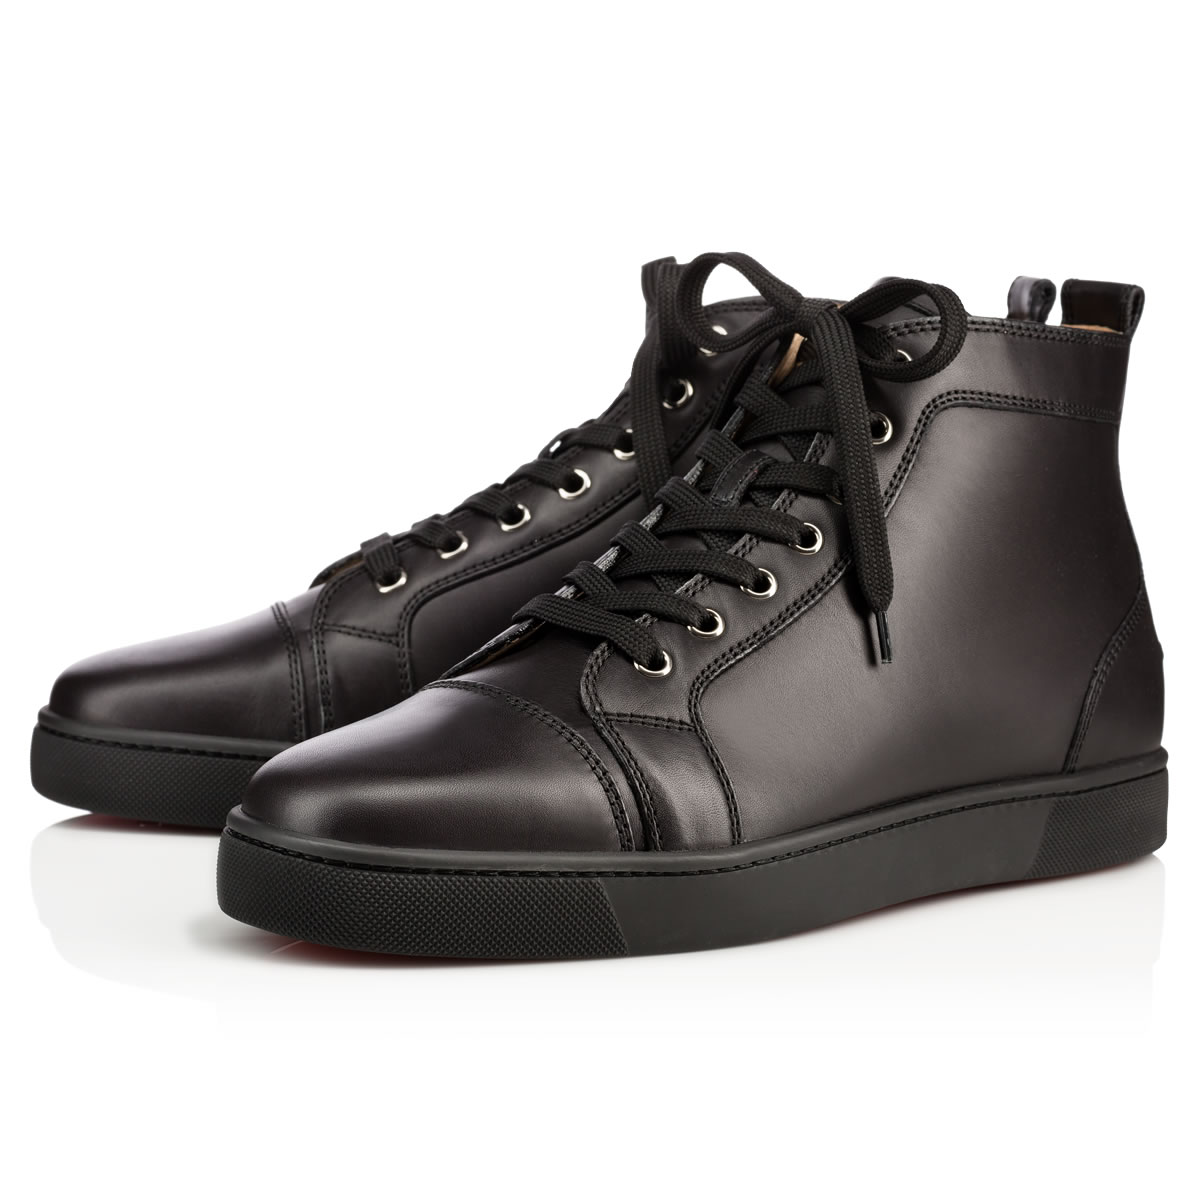 Louis - High-top sneakers - Calf leather - Black - Men - Christian